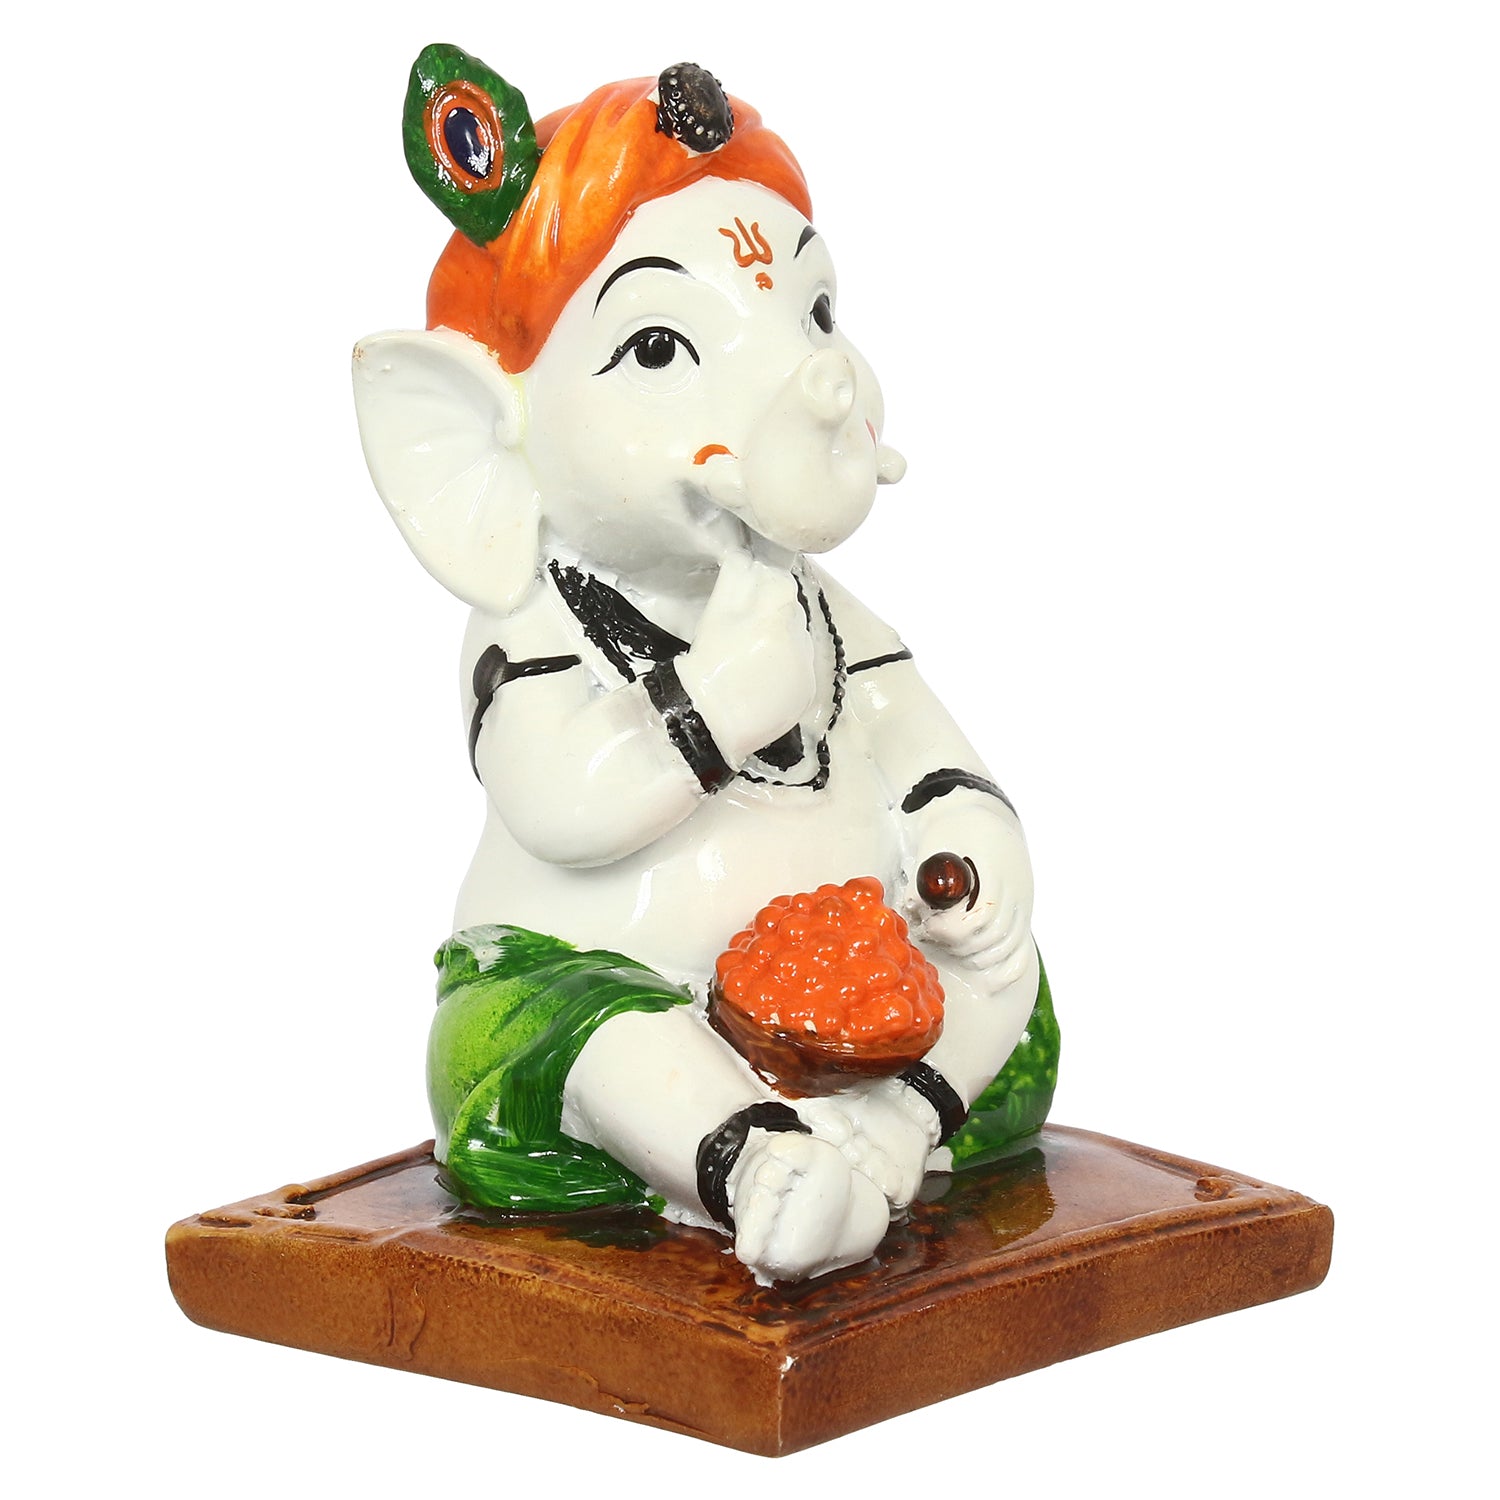 Decorative Polyresin Lord Ganesha Idol eating Ladoo in Lord Krishna Avatar (White, Orange, Green) 2